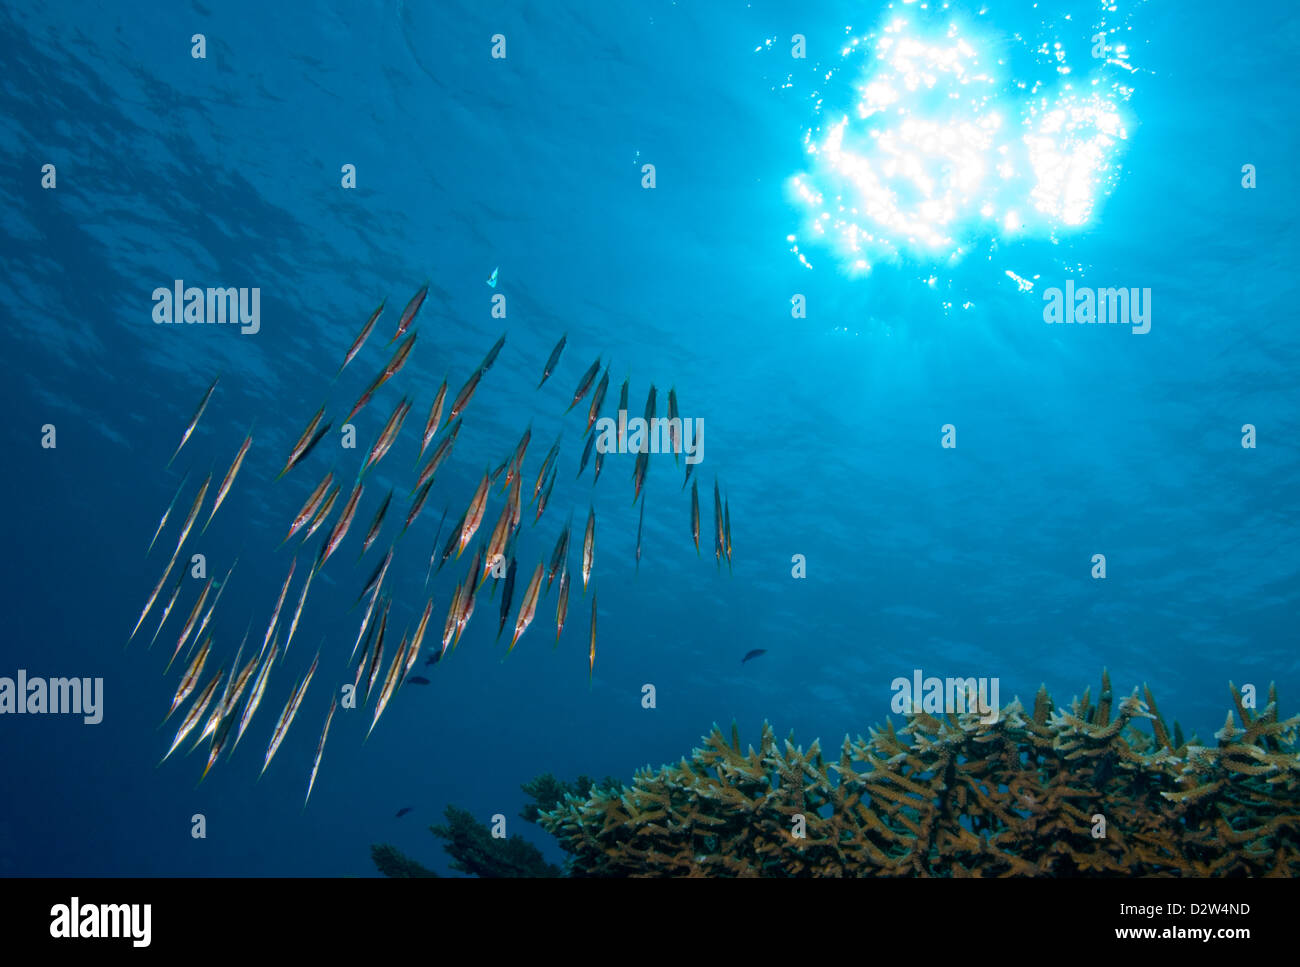 Sea of Floating Daggers Stock Photo